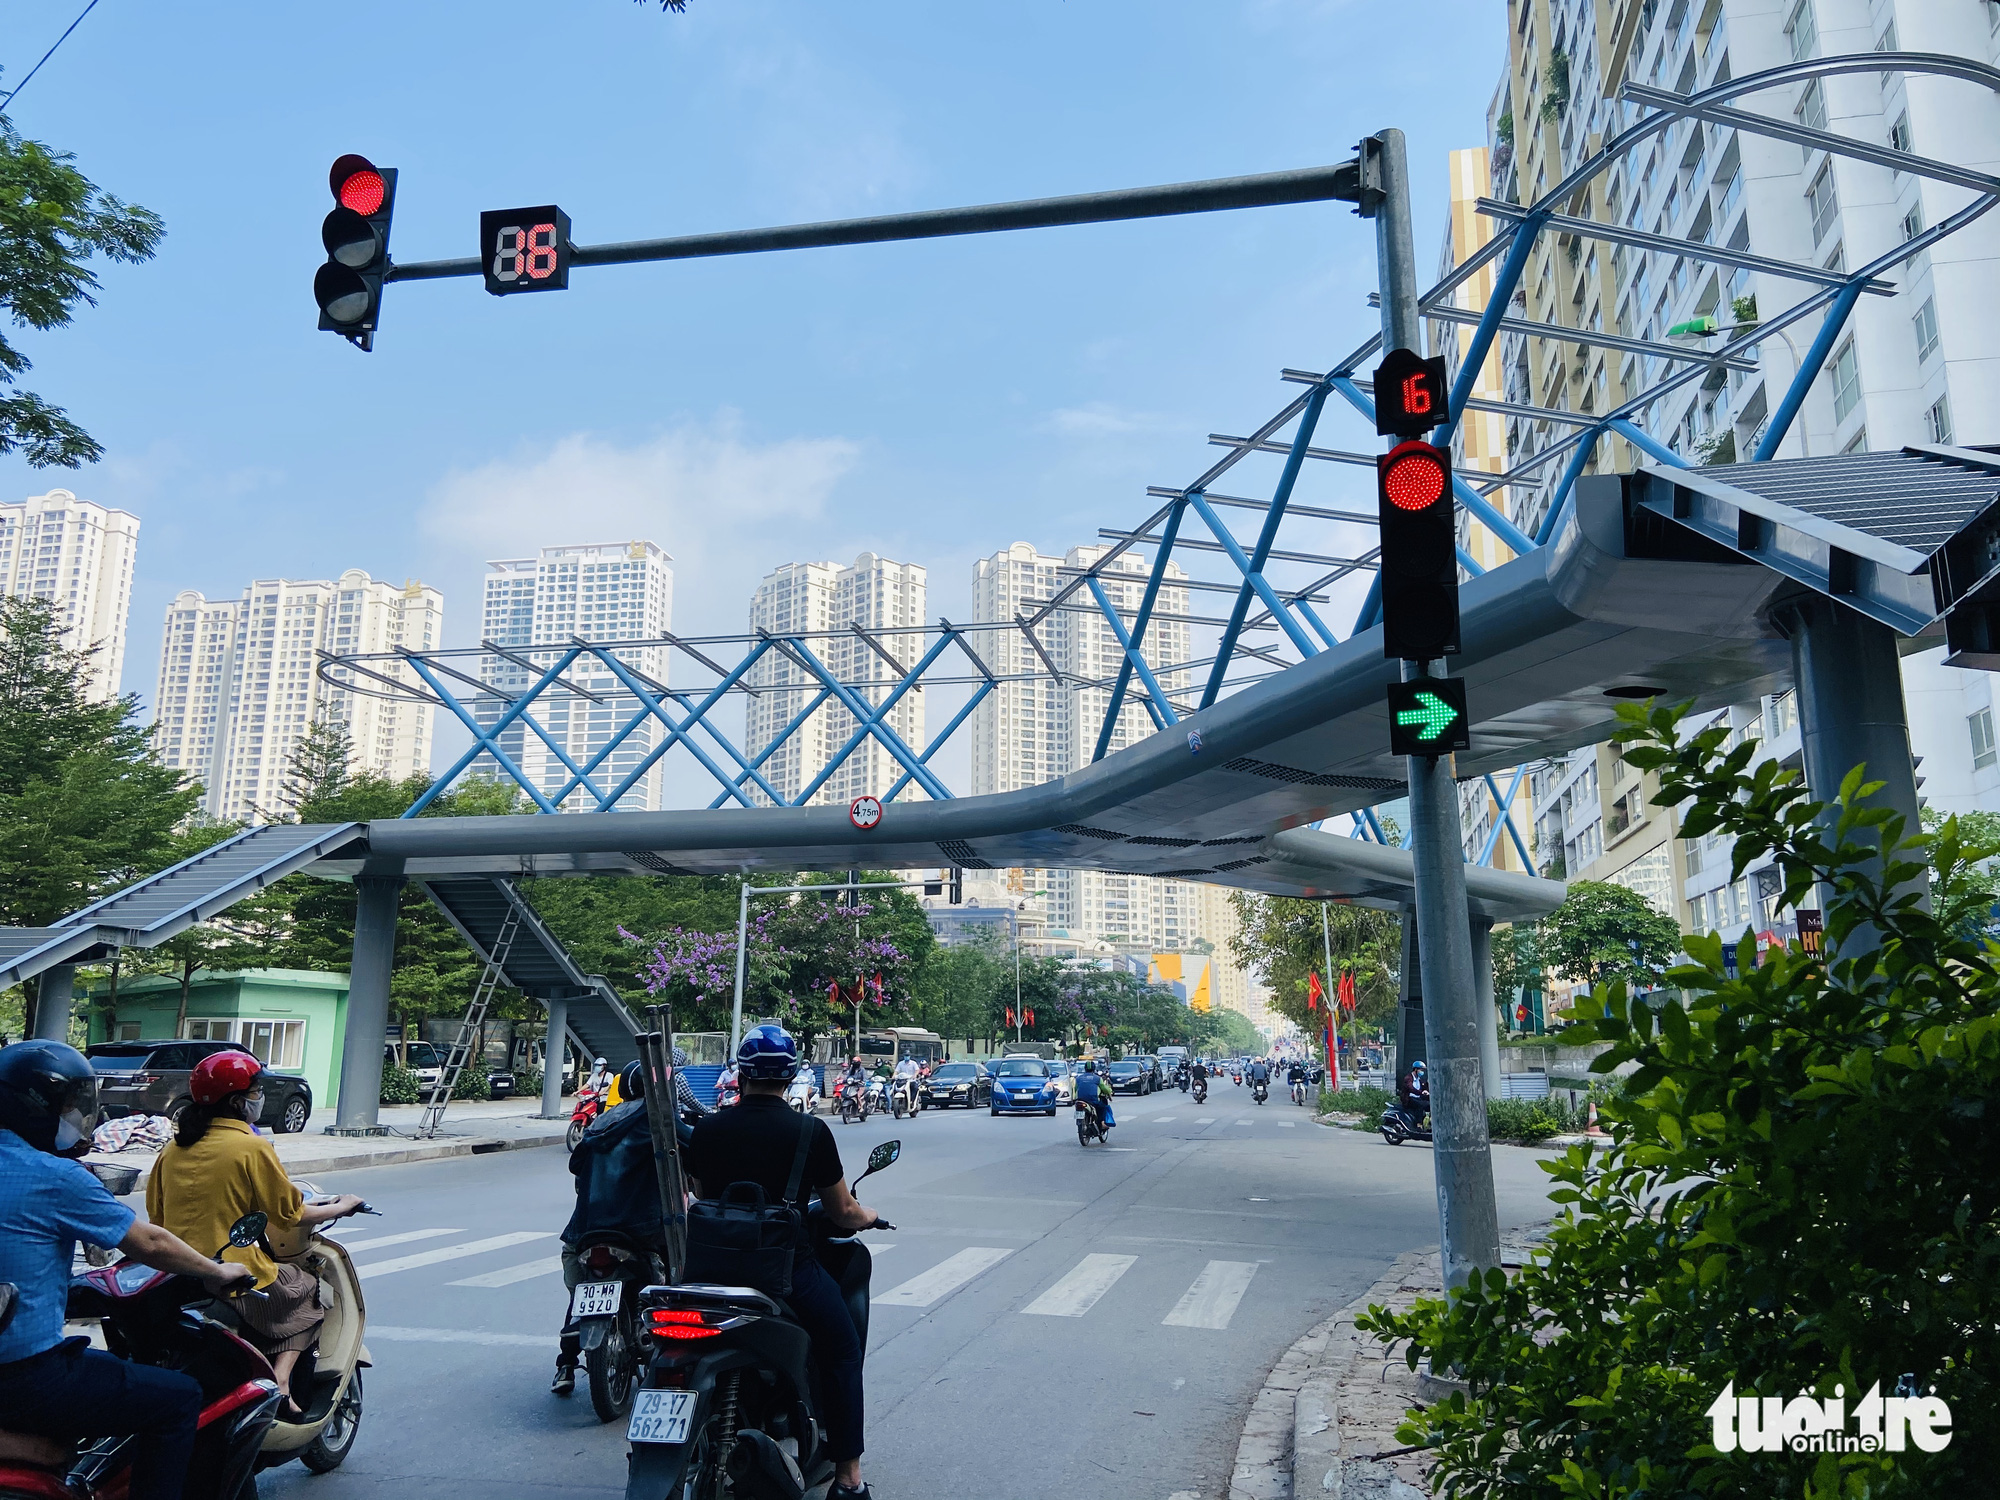 Hanoi to open new Y-shaped footbridge next month